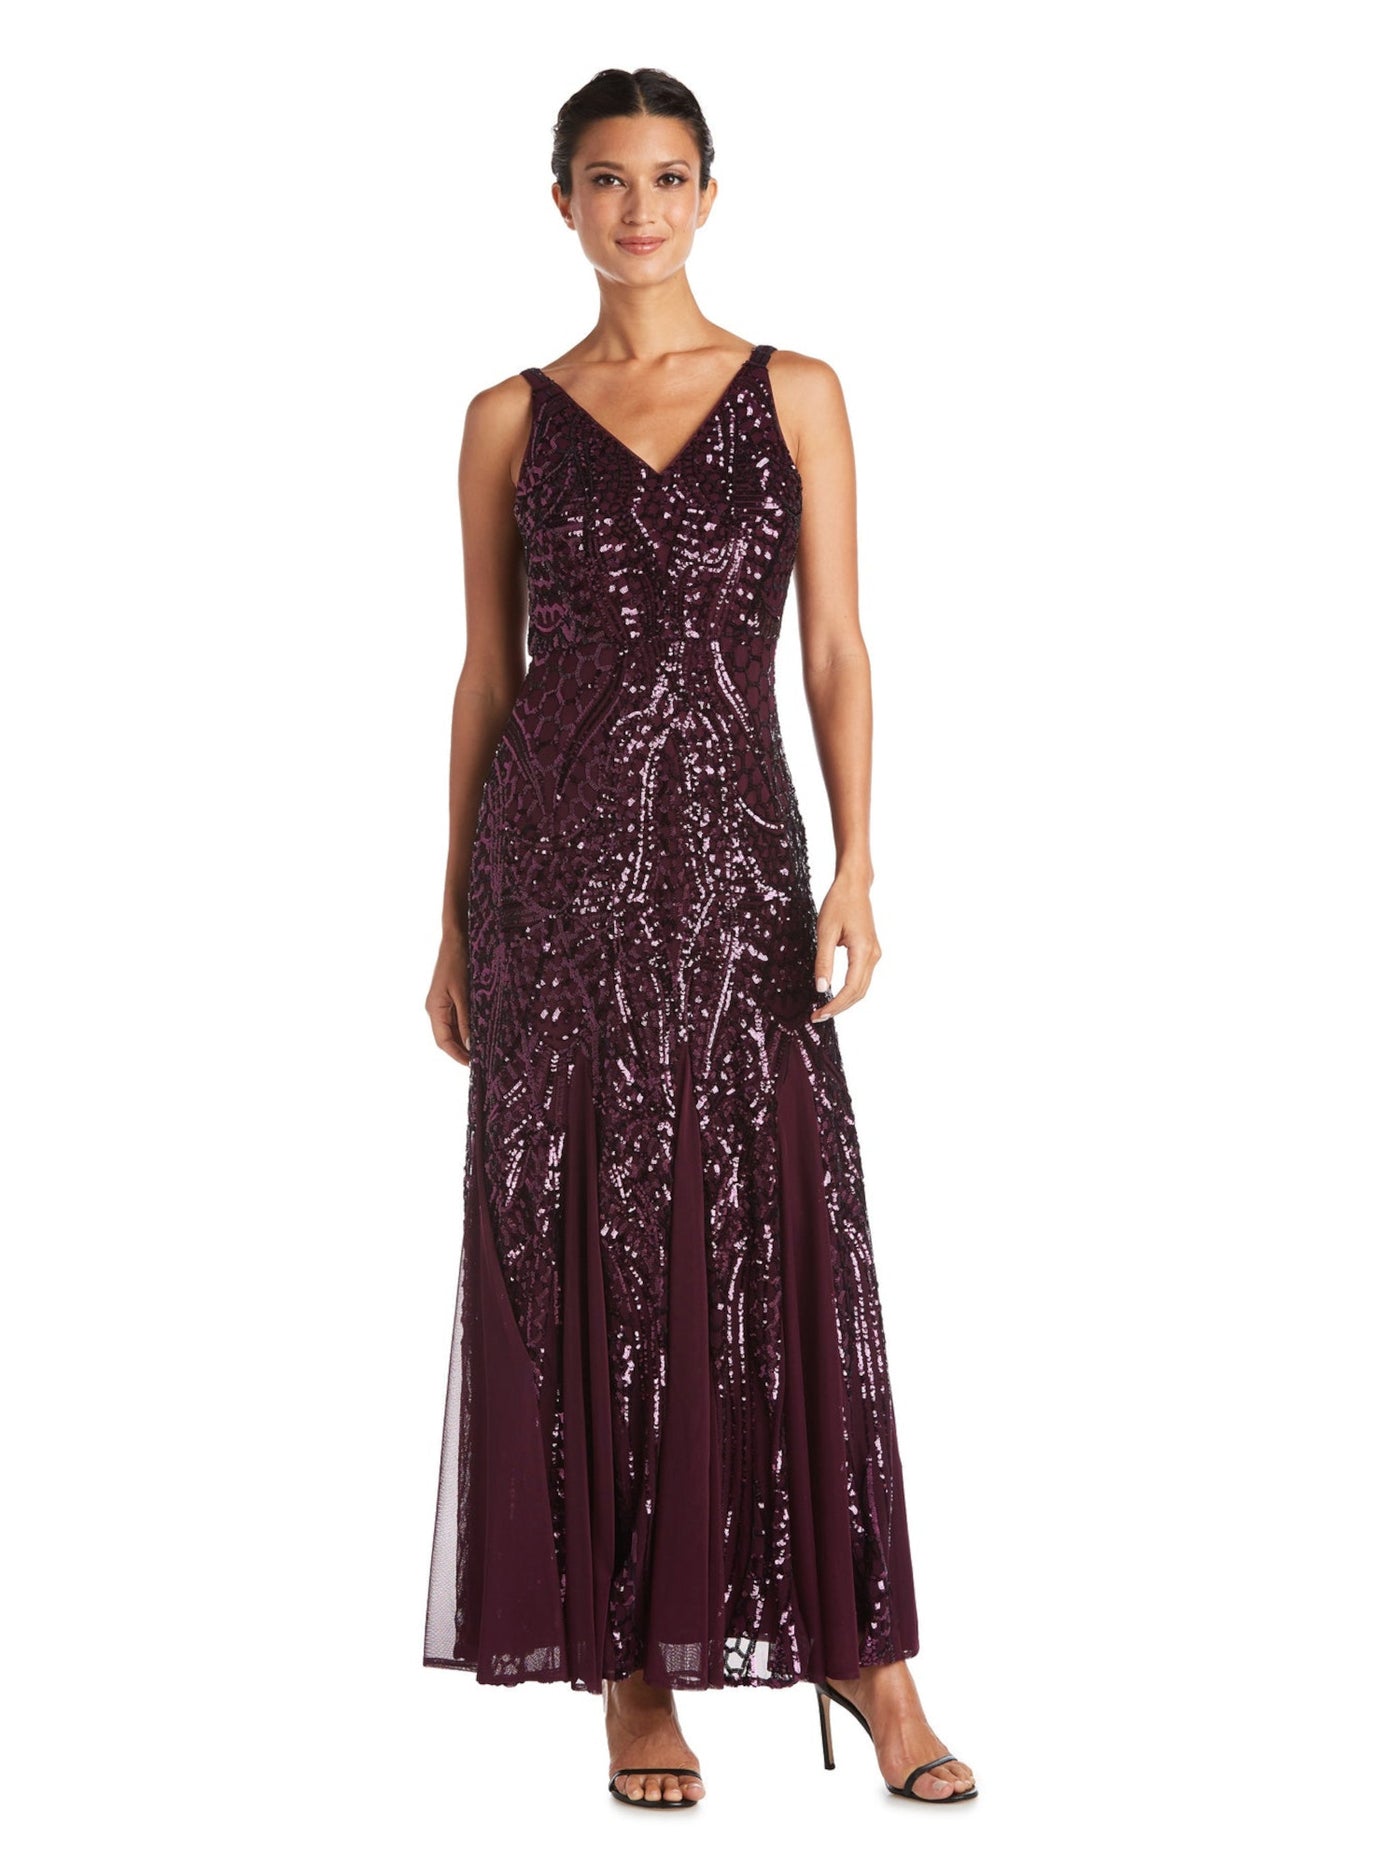 NIGHTWAY Womens Purple Sequined Zippered Sleeveless V Neck Full-Length Evening Sheath Dress 8